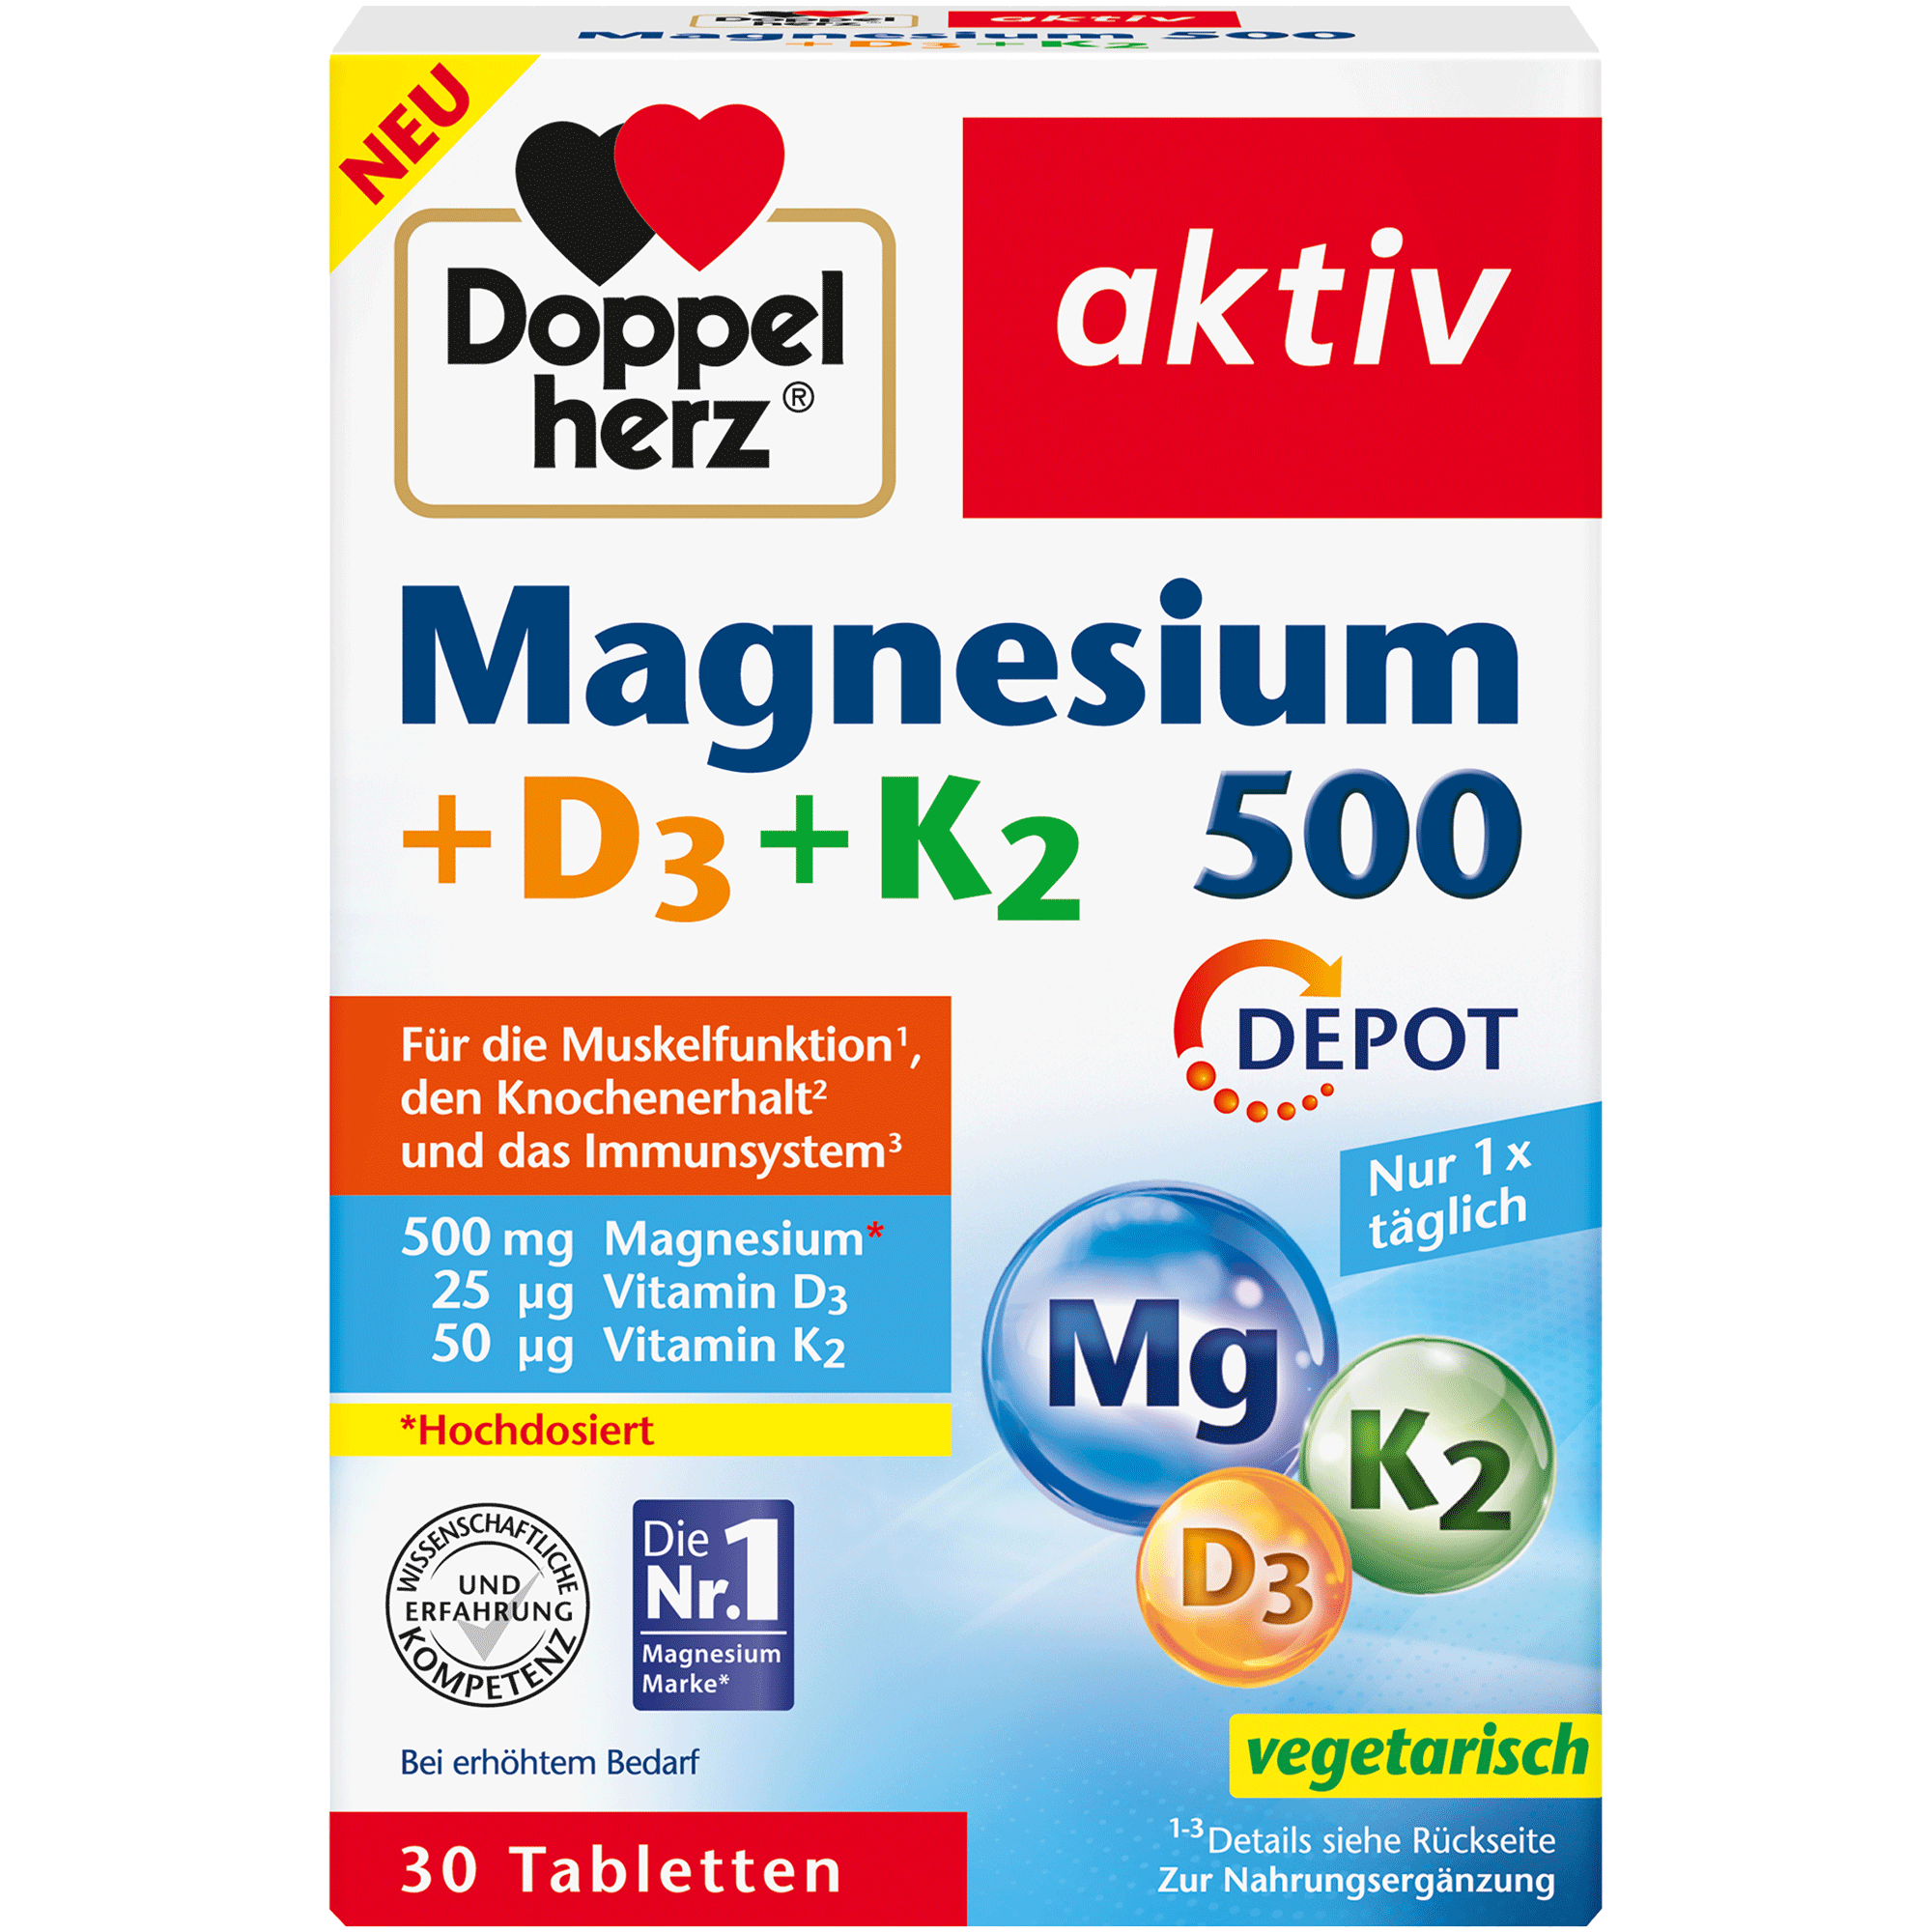 Bild: DOPPELHERZ Magnesium 500+D3+K2 Depot 